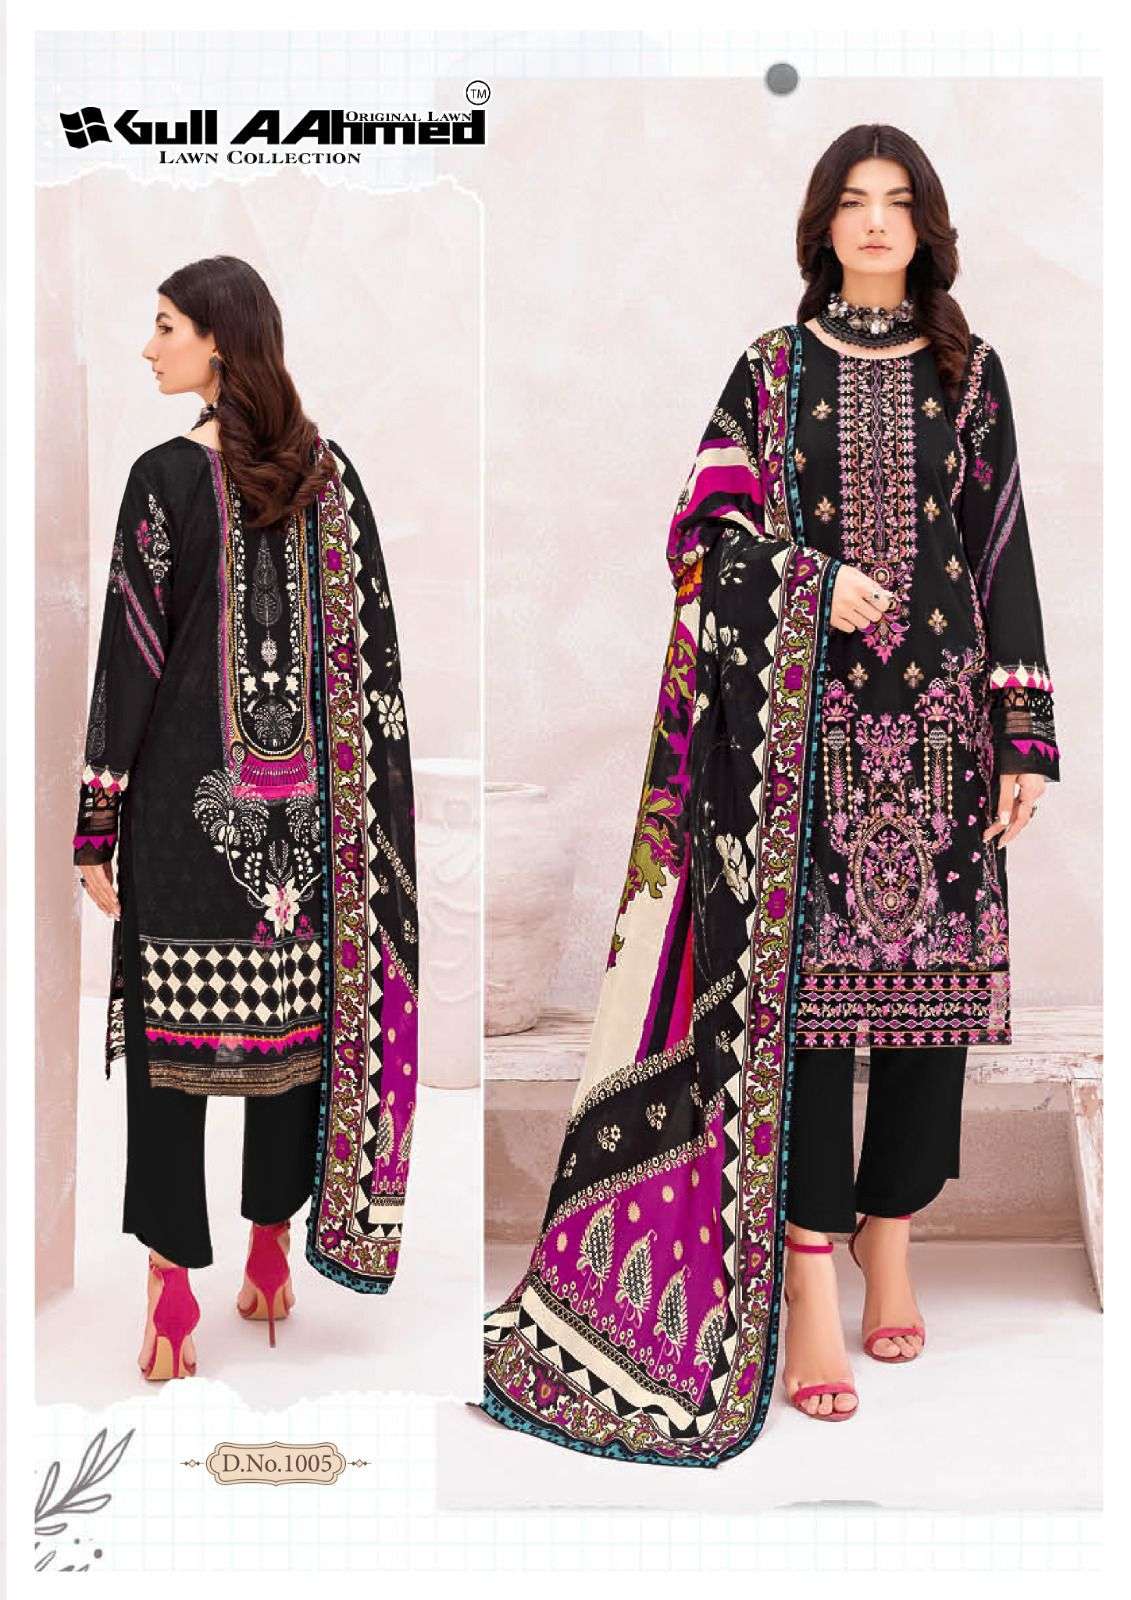 gullaahmed azure luxury lawn collection 1001-1006 series latest pakistani salwar kameez wholesaler surat gujarat